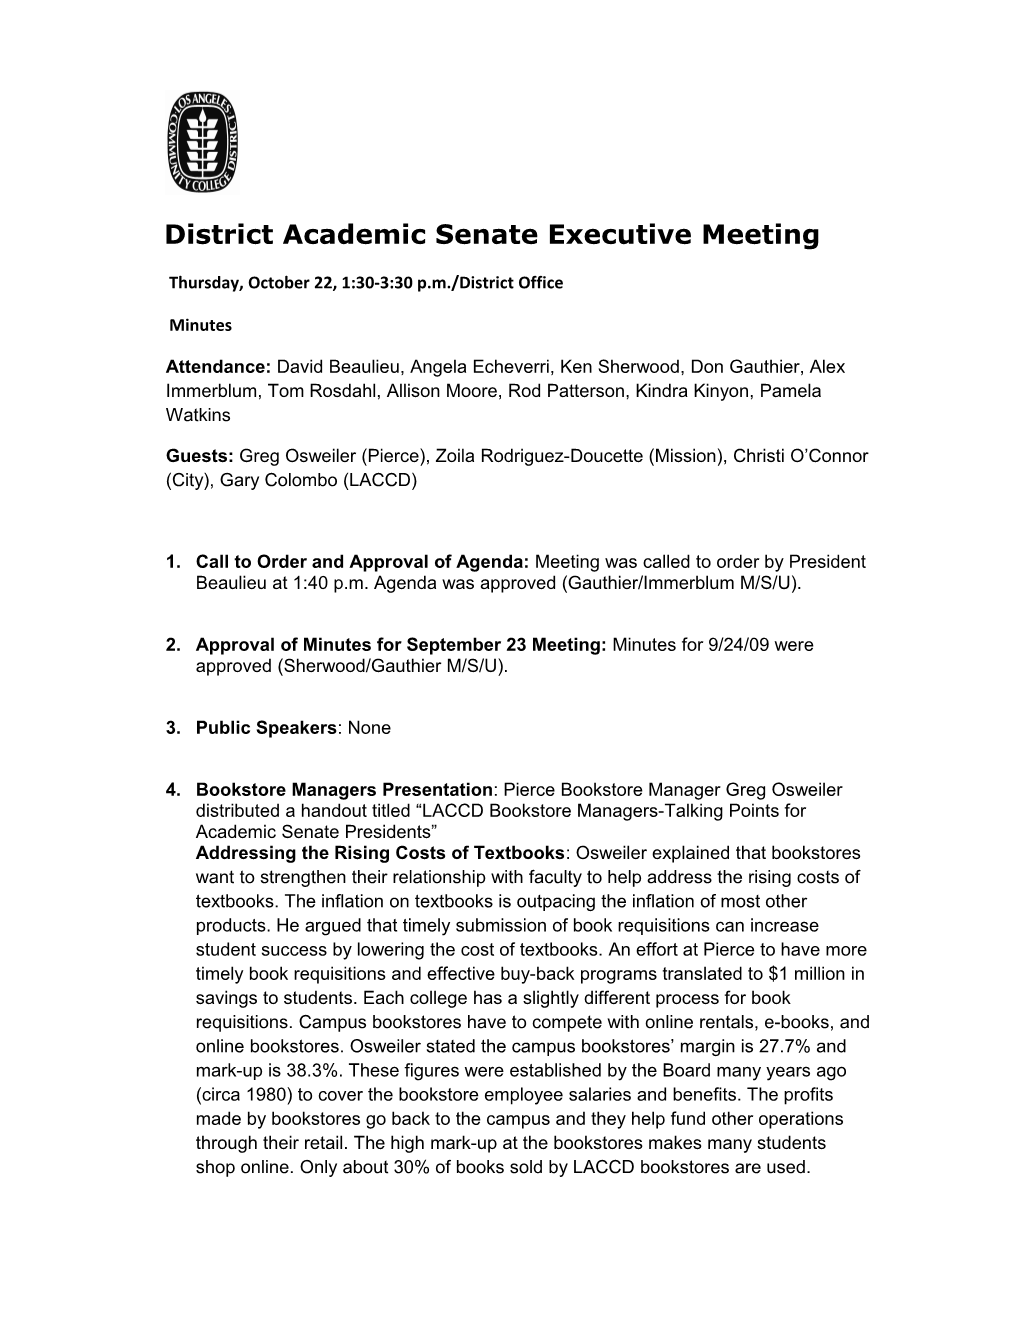 District Academic Senate Executive Meeting s1